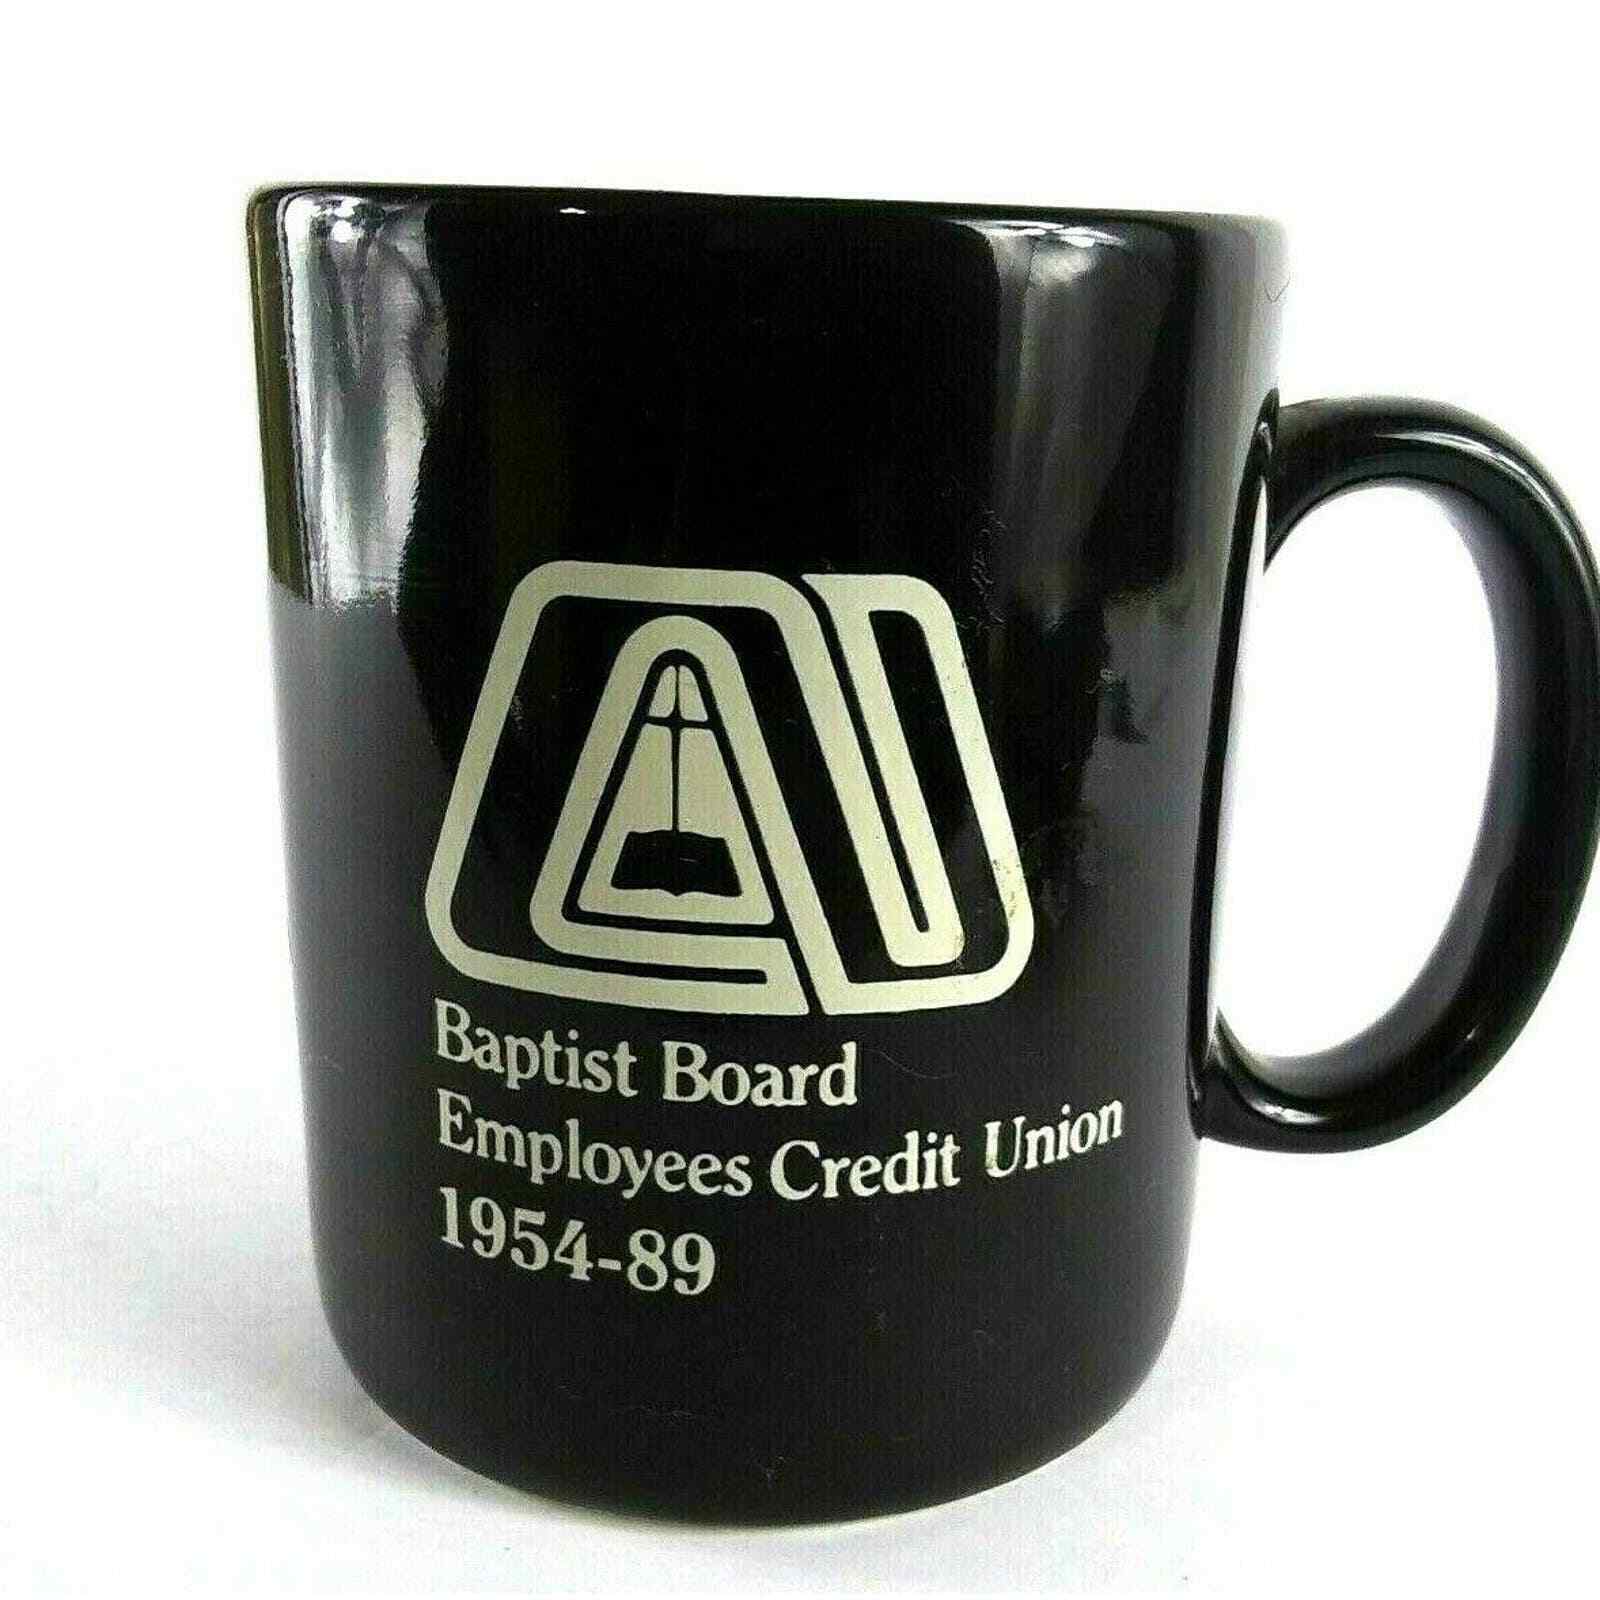 Baptist Board Employees Credit Union Coffee Cup Mug Black White Print